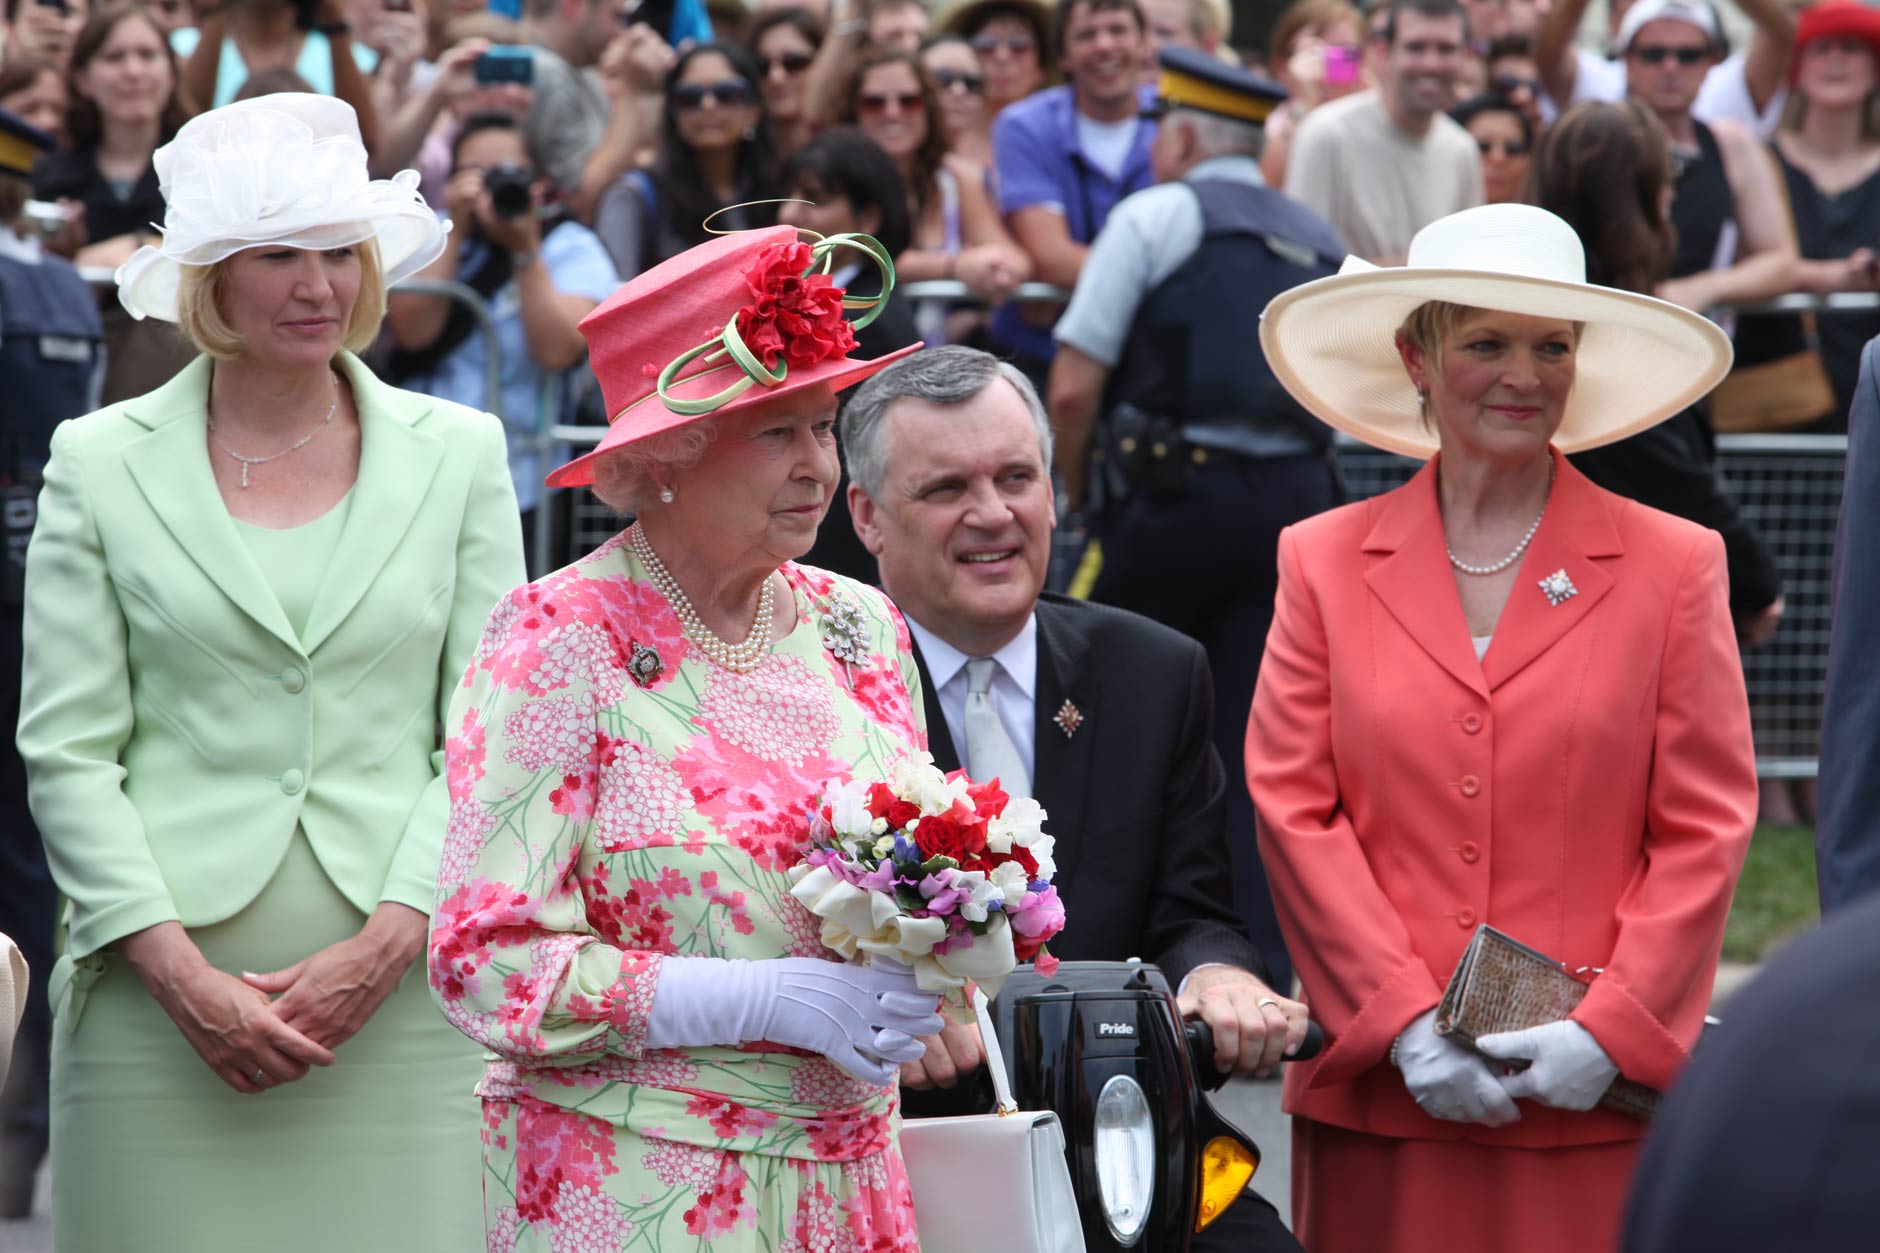 Her Majesty Queen Elizabeth II with Ontario Lieutenant Governor David Onley and Mrs. Onley, 2010